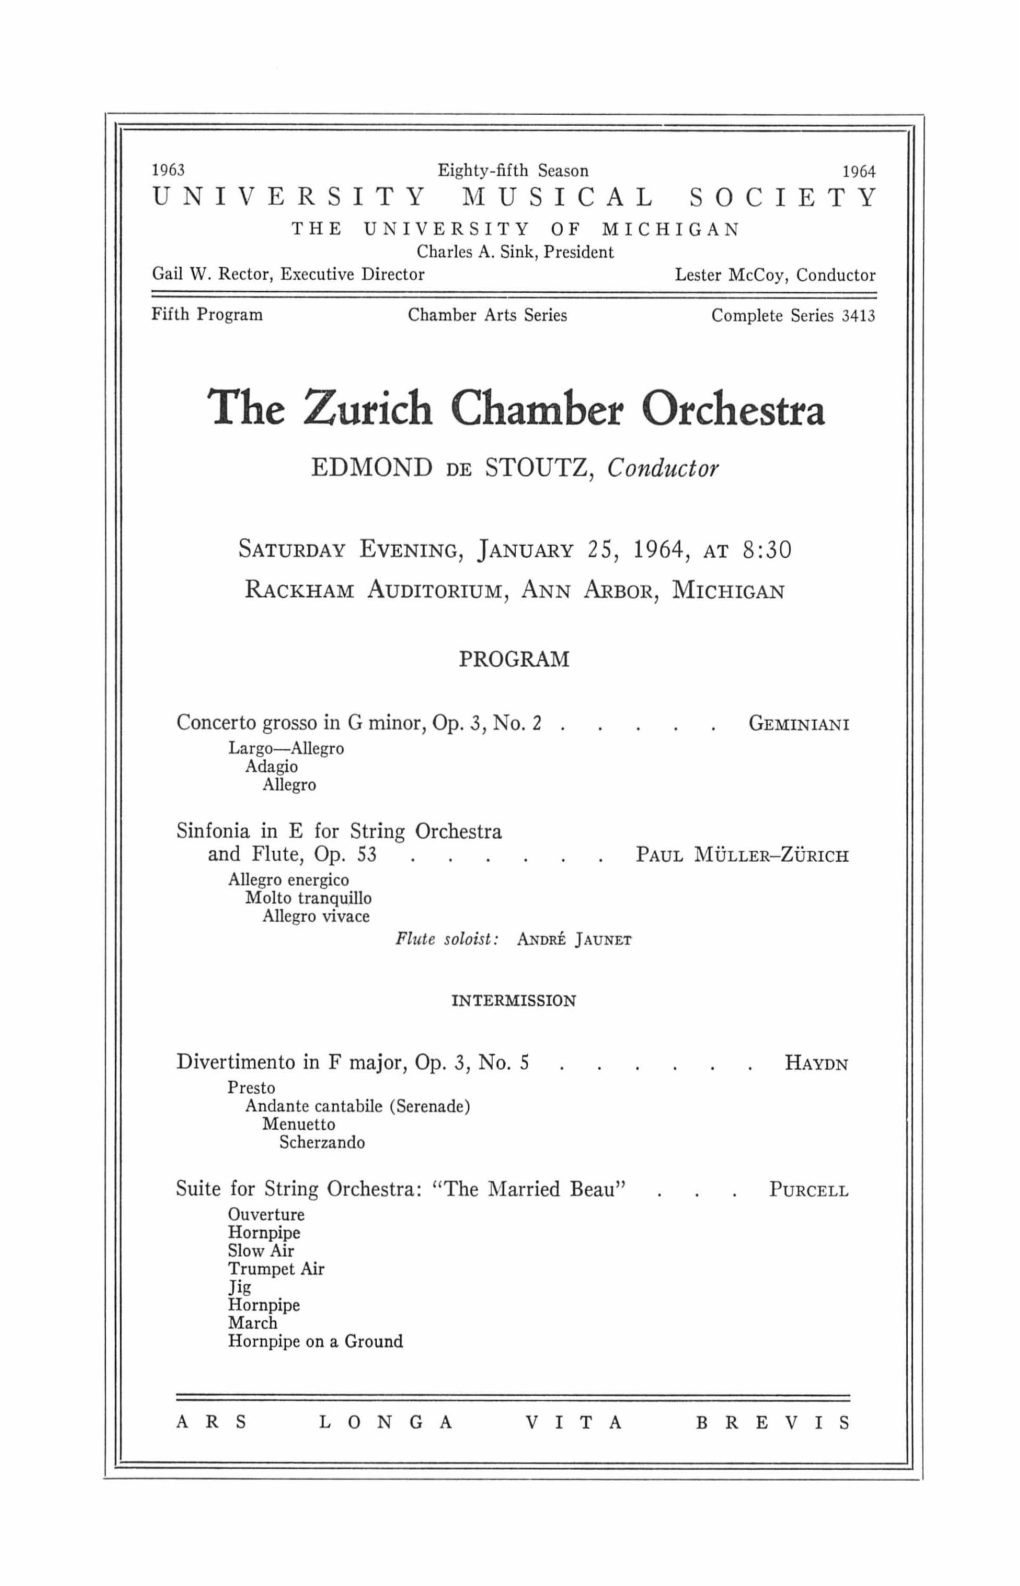 The Zurich Chamber Orchestra